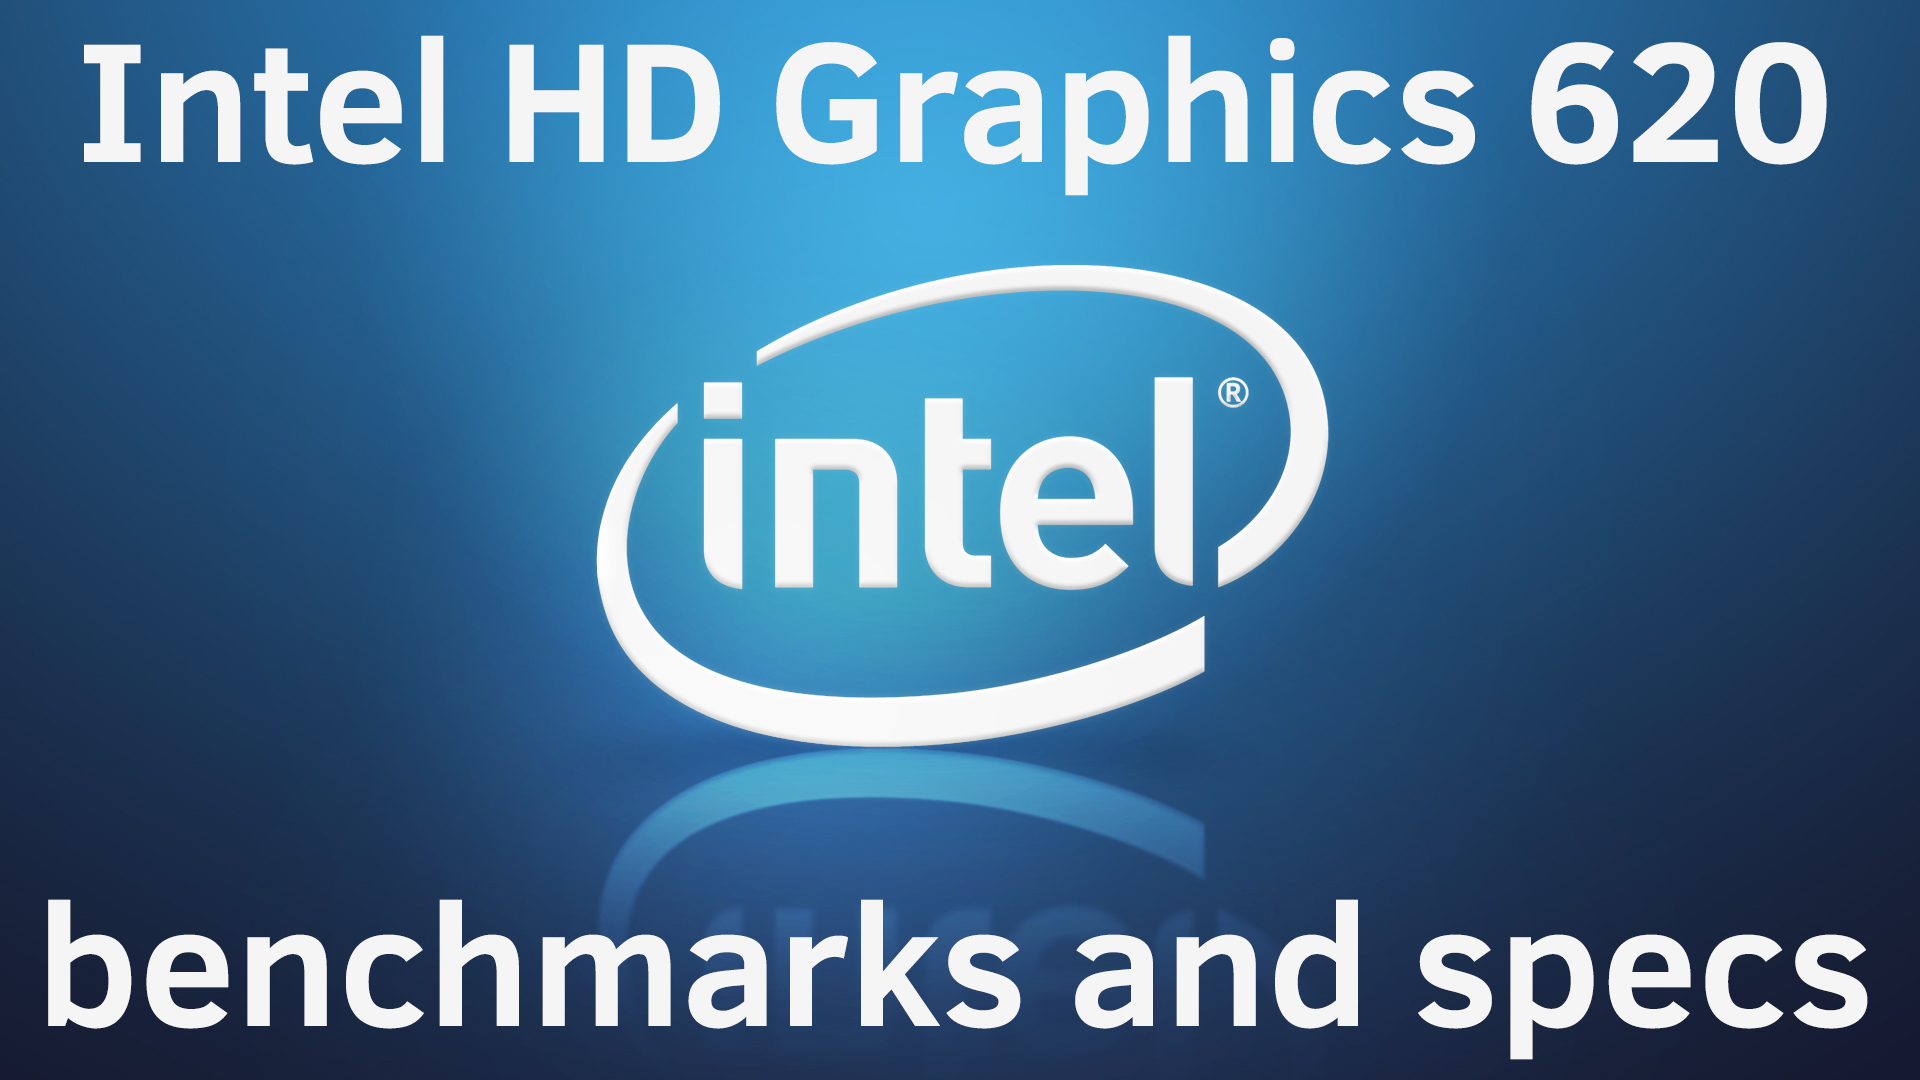 integrated intel hd graphics 520